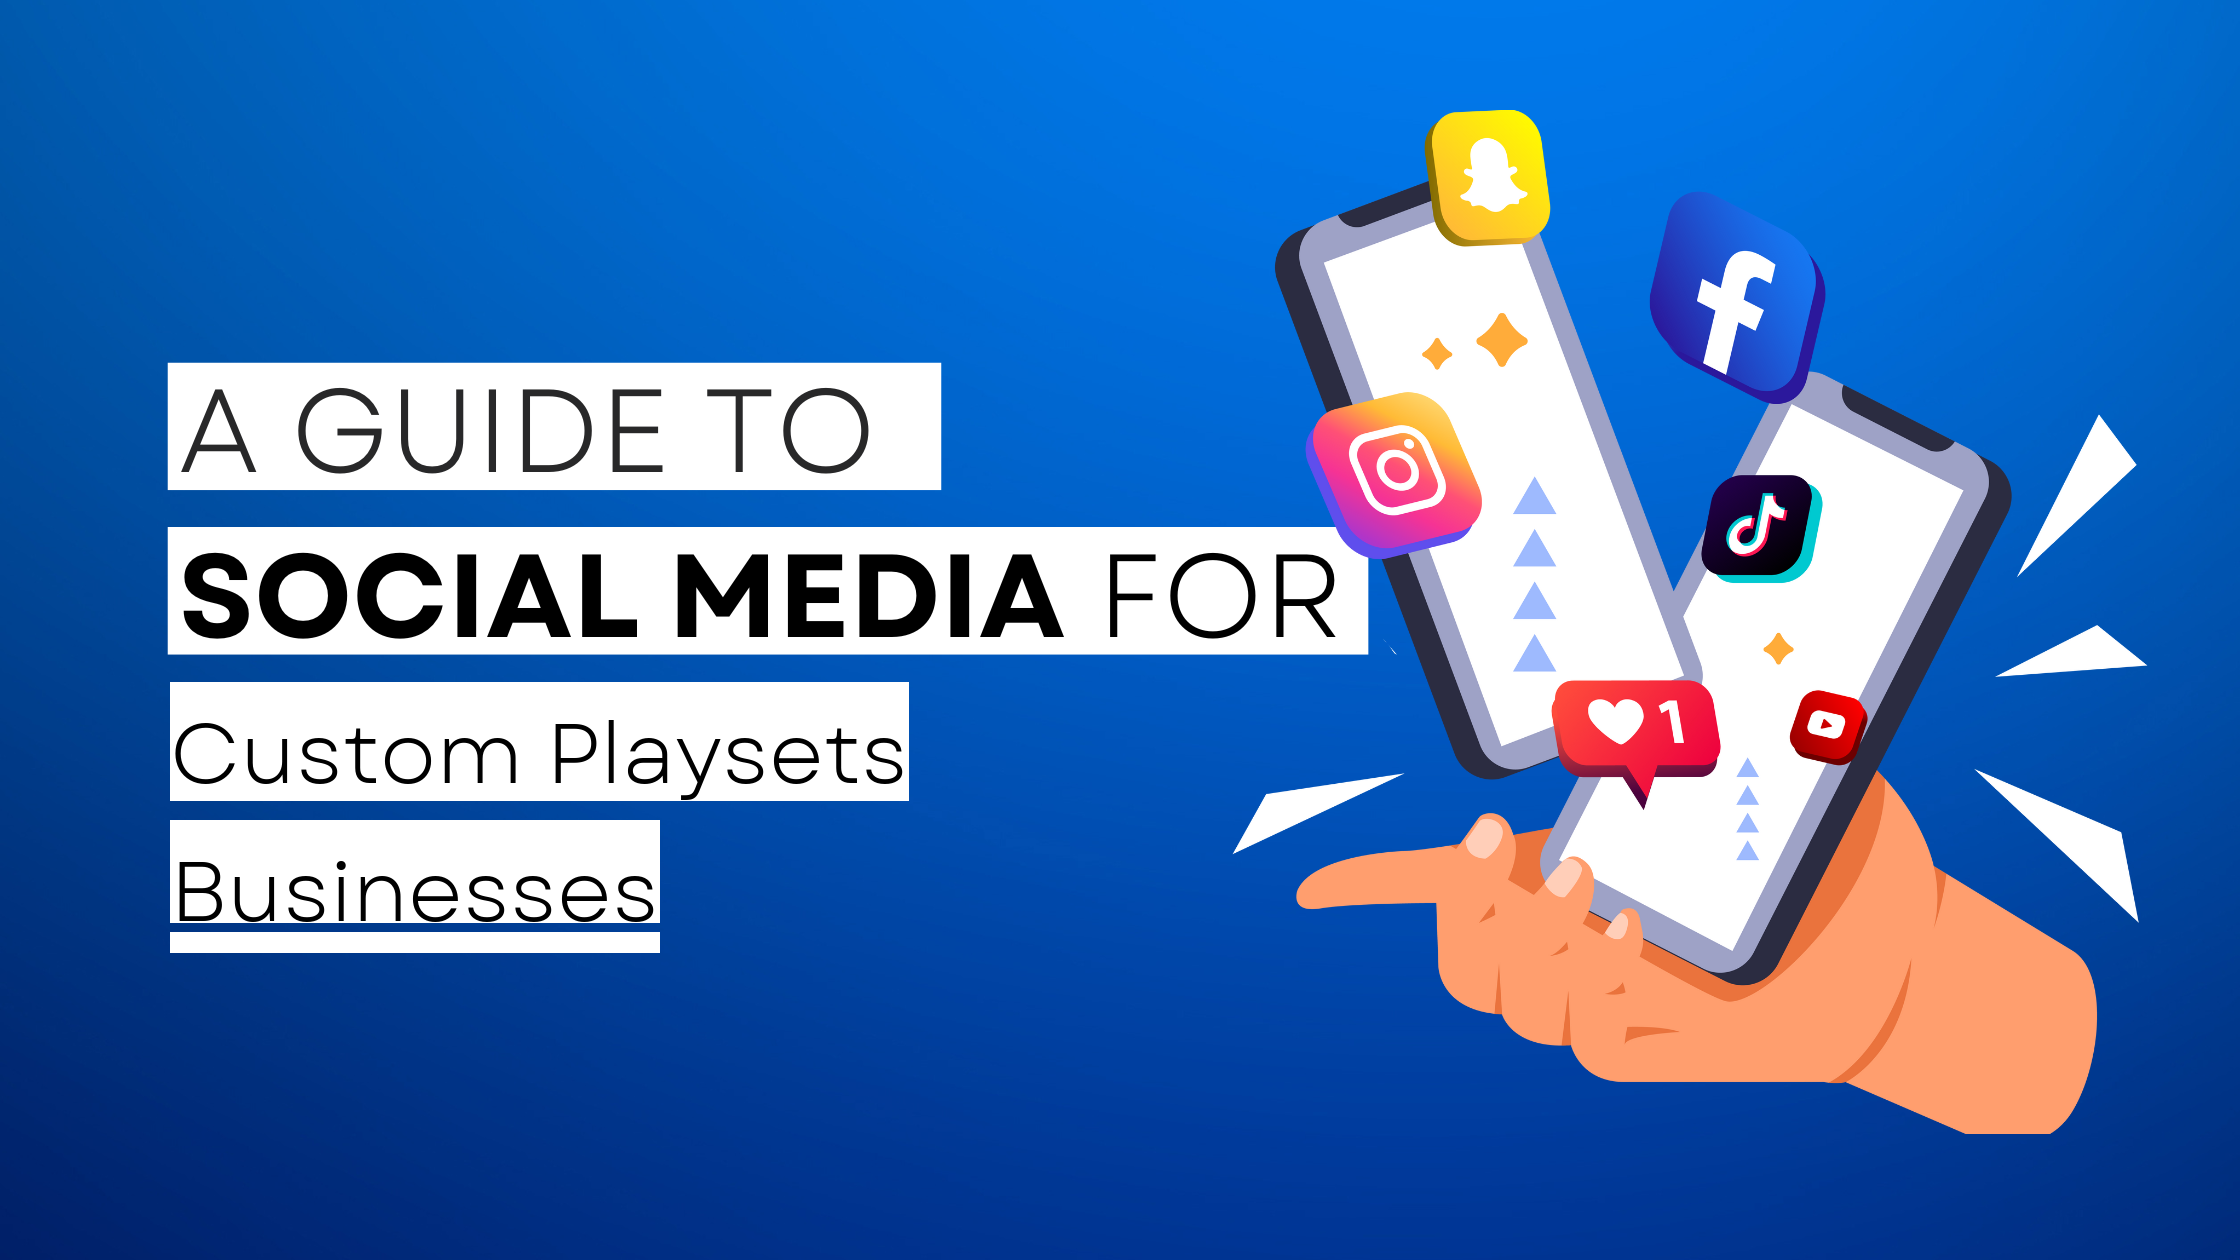 How to start Custom Playsets  on social media